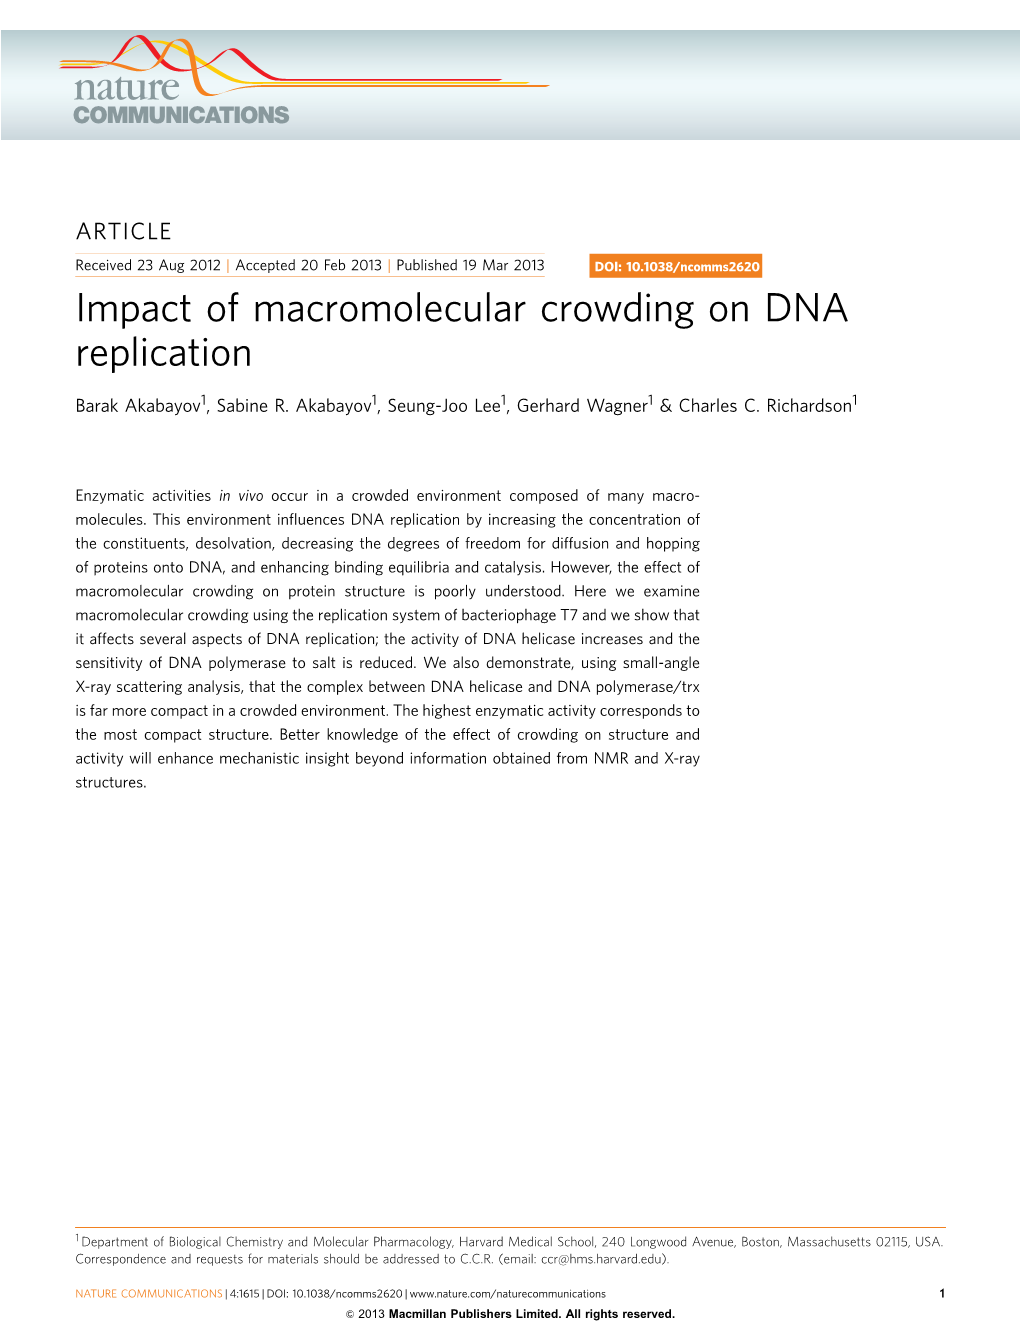 Impact of Macromolecular Crowding on DNA Replication